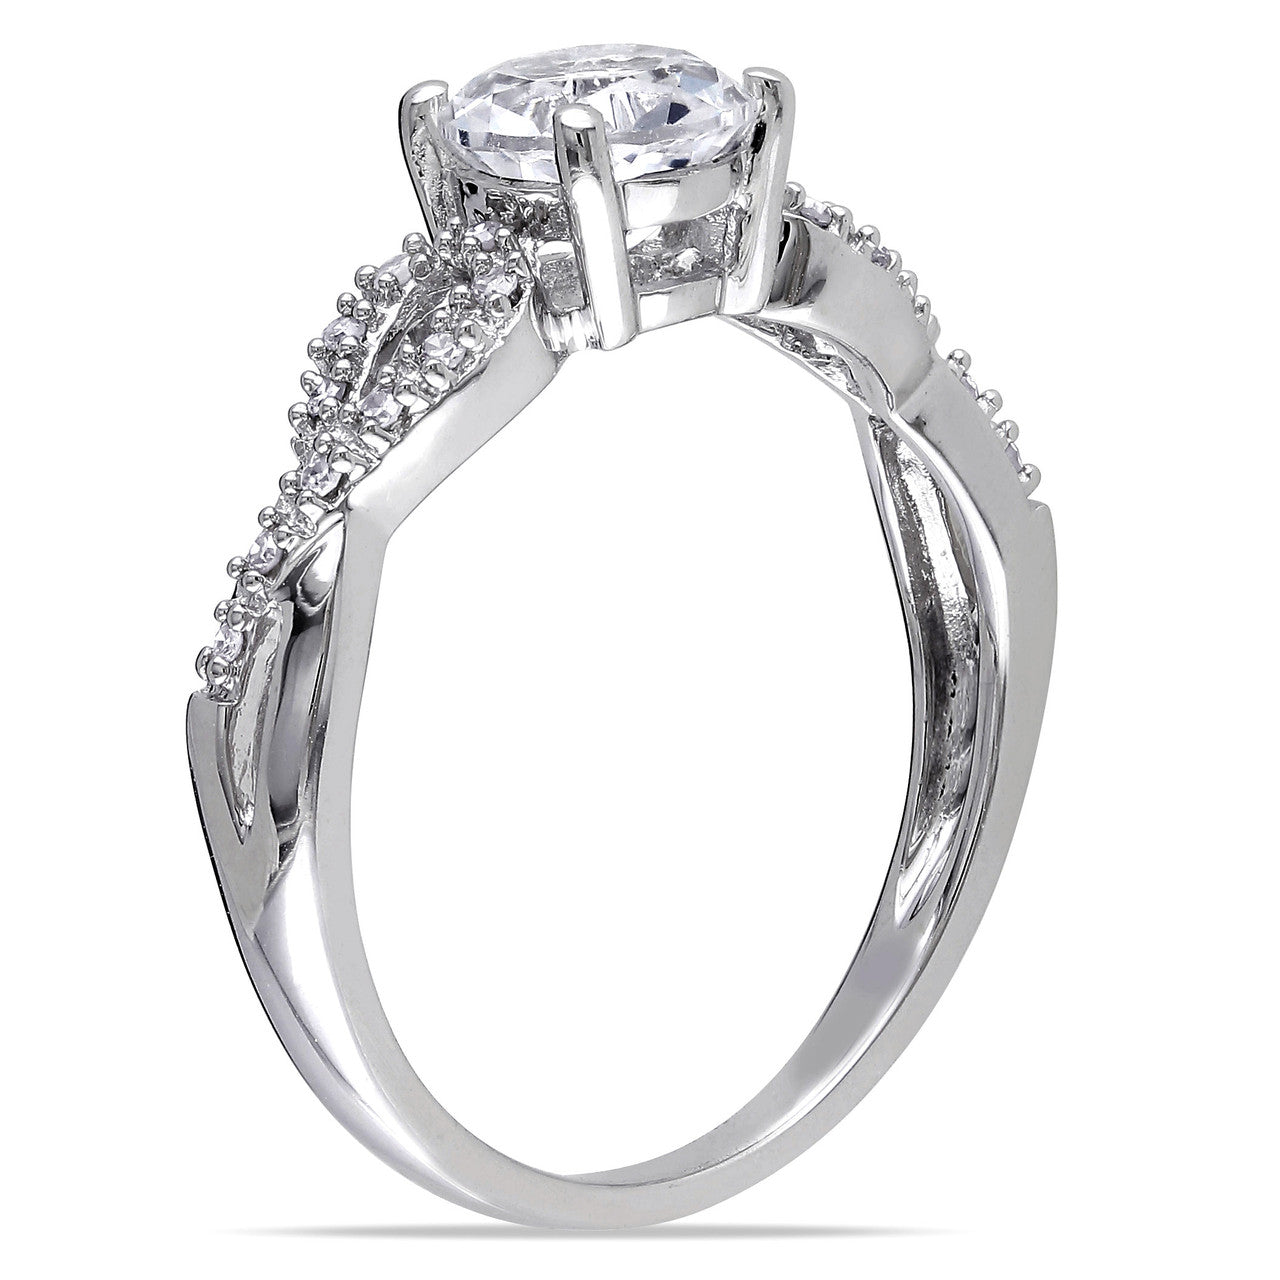 Ice Jewellery 1/10 CT Diamond TW and 1 CT TGW Created White Sapphire Ring in 10k White Gold 75000004658 | Ice Jewellery Australia